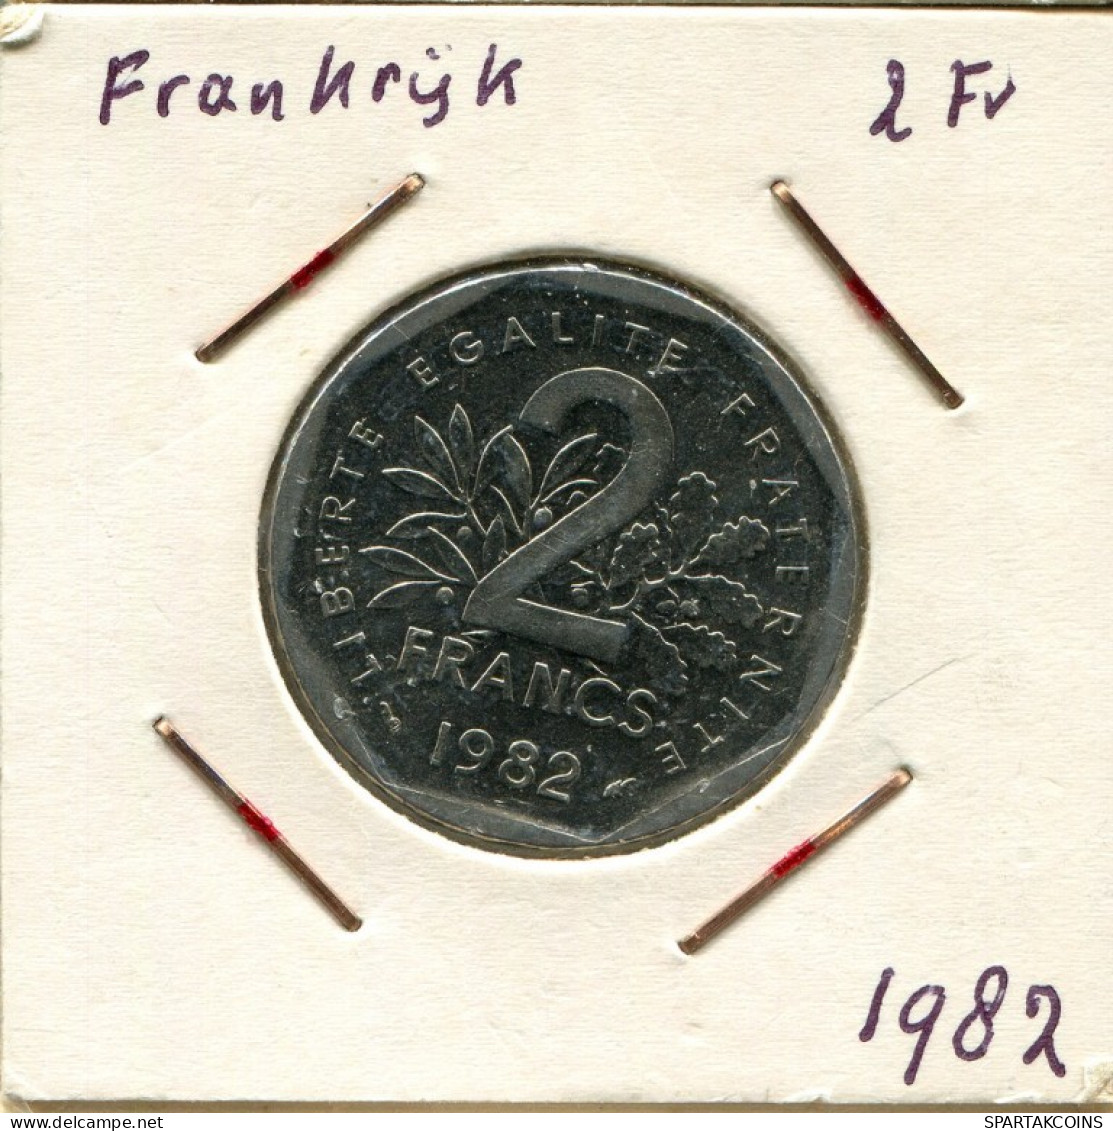 2 FRANCS 1982 FRANKREICH FRANCE Semeuse Französisch Münze #AM612.D.A - 2 Francs